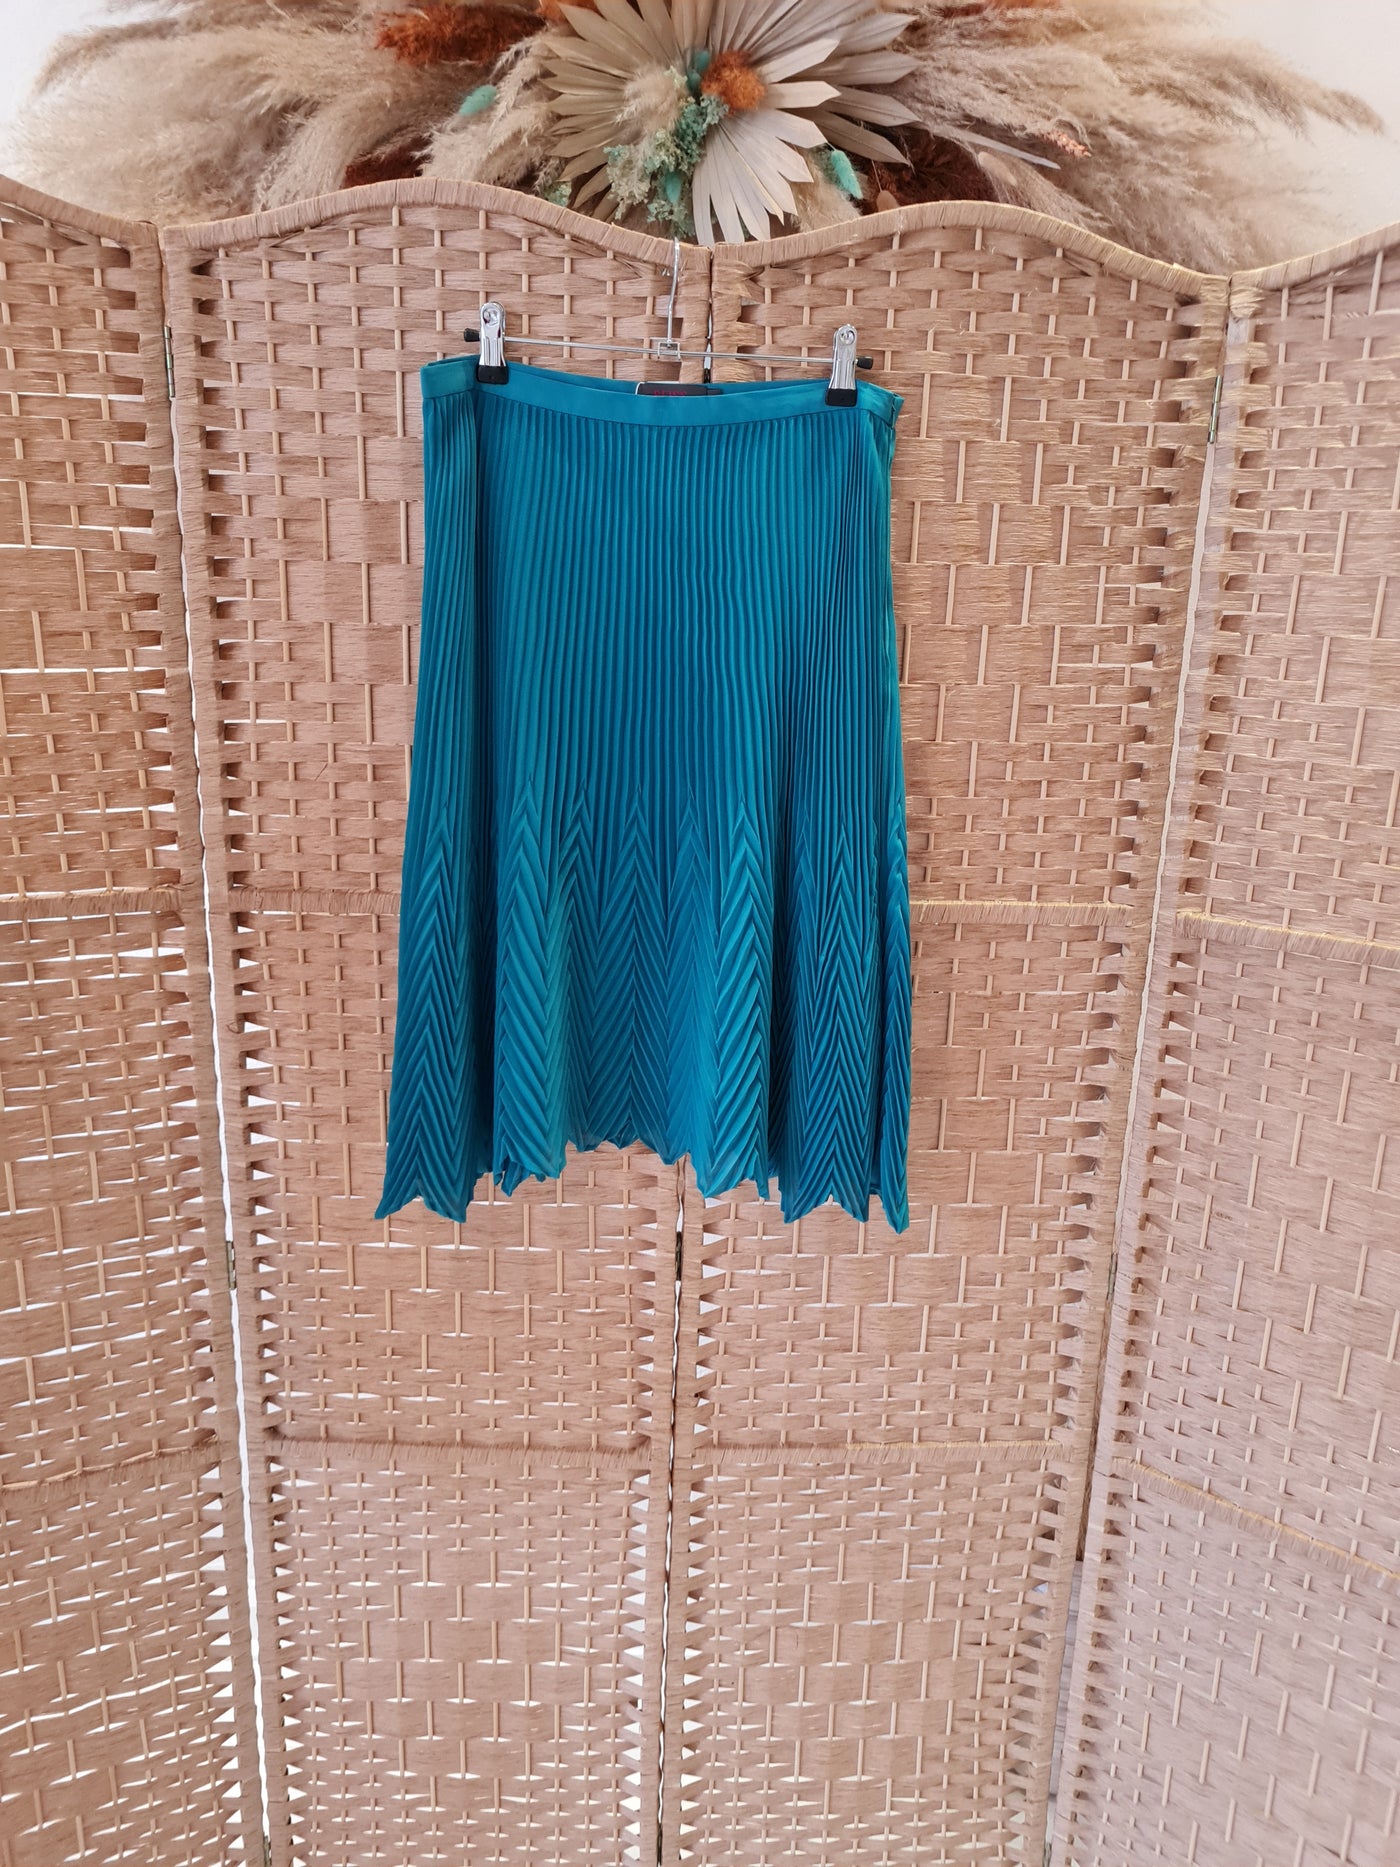 Reiss Green Pleat Skirt Size 10/12